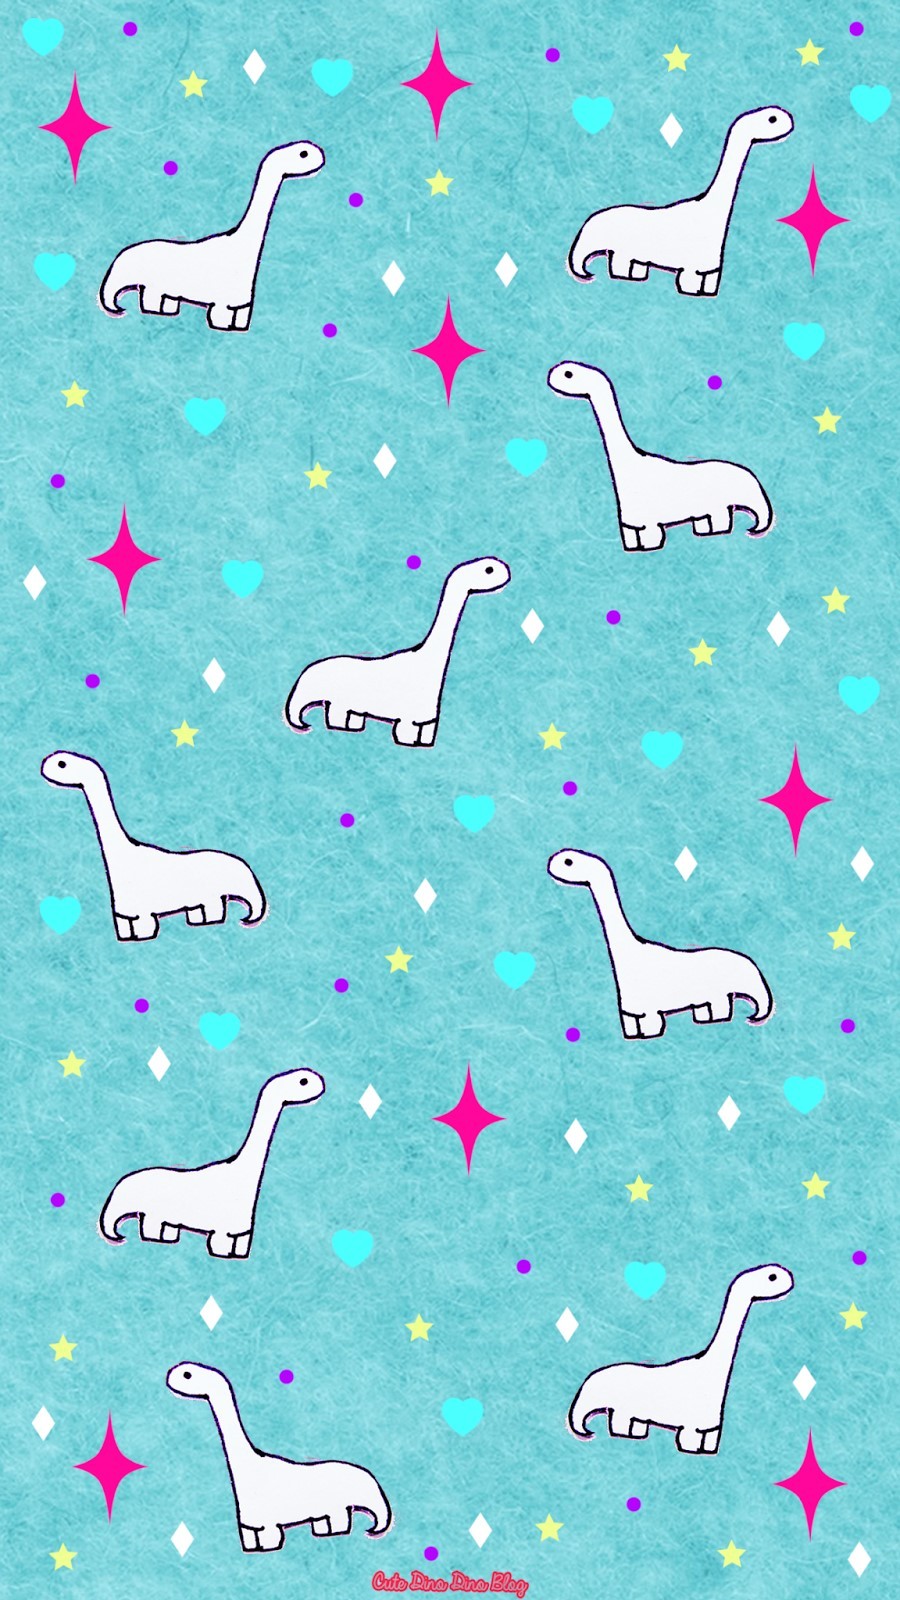 Cute Dinosaur Iphone Wallpapers